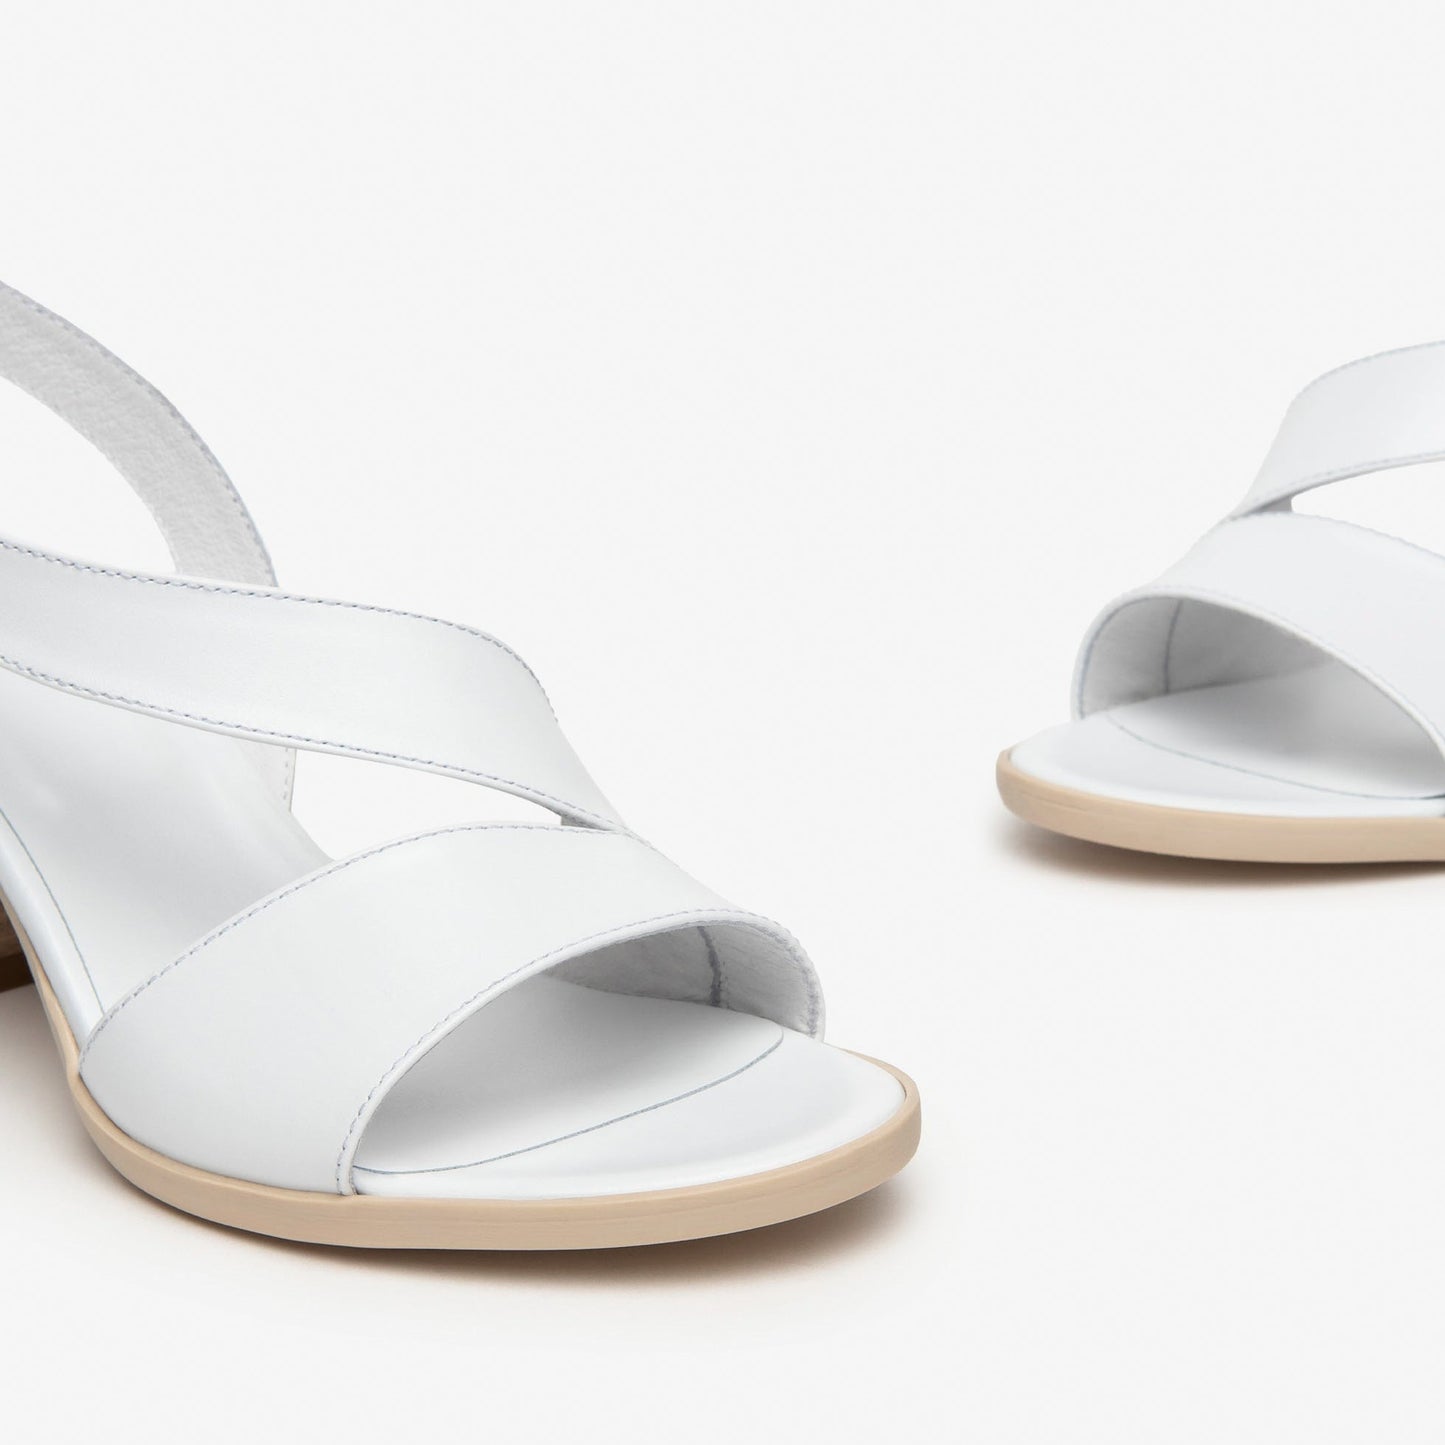 Sandals NeroGiardini women white leather heel